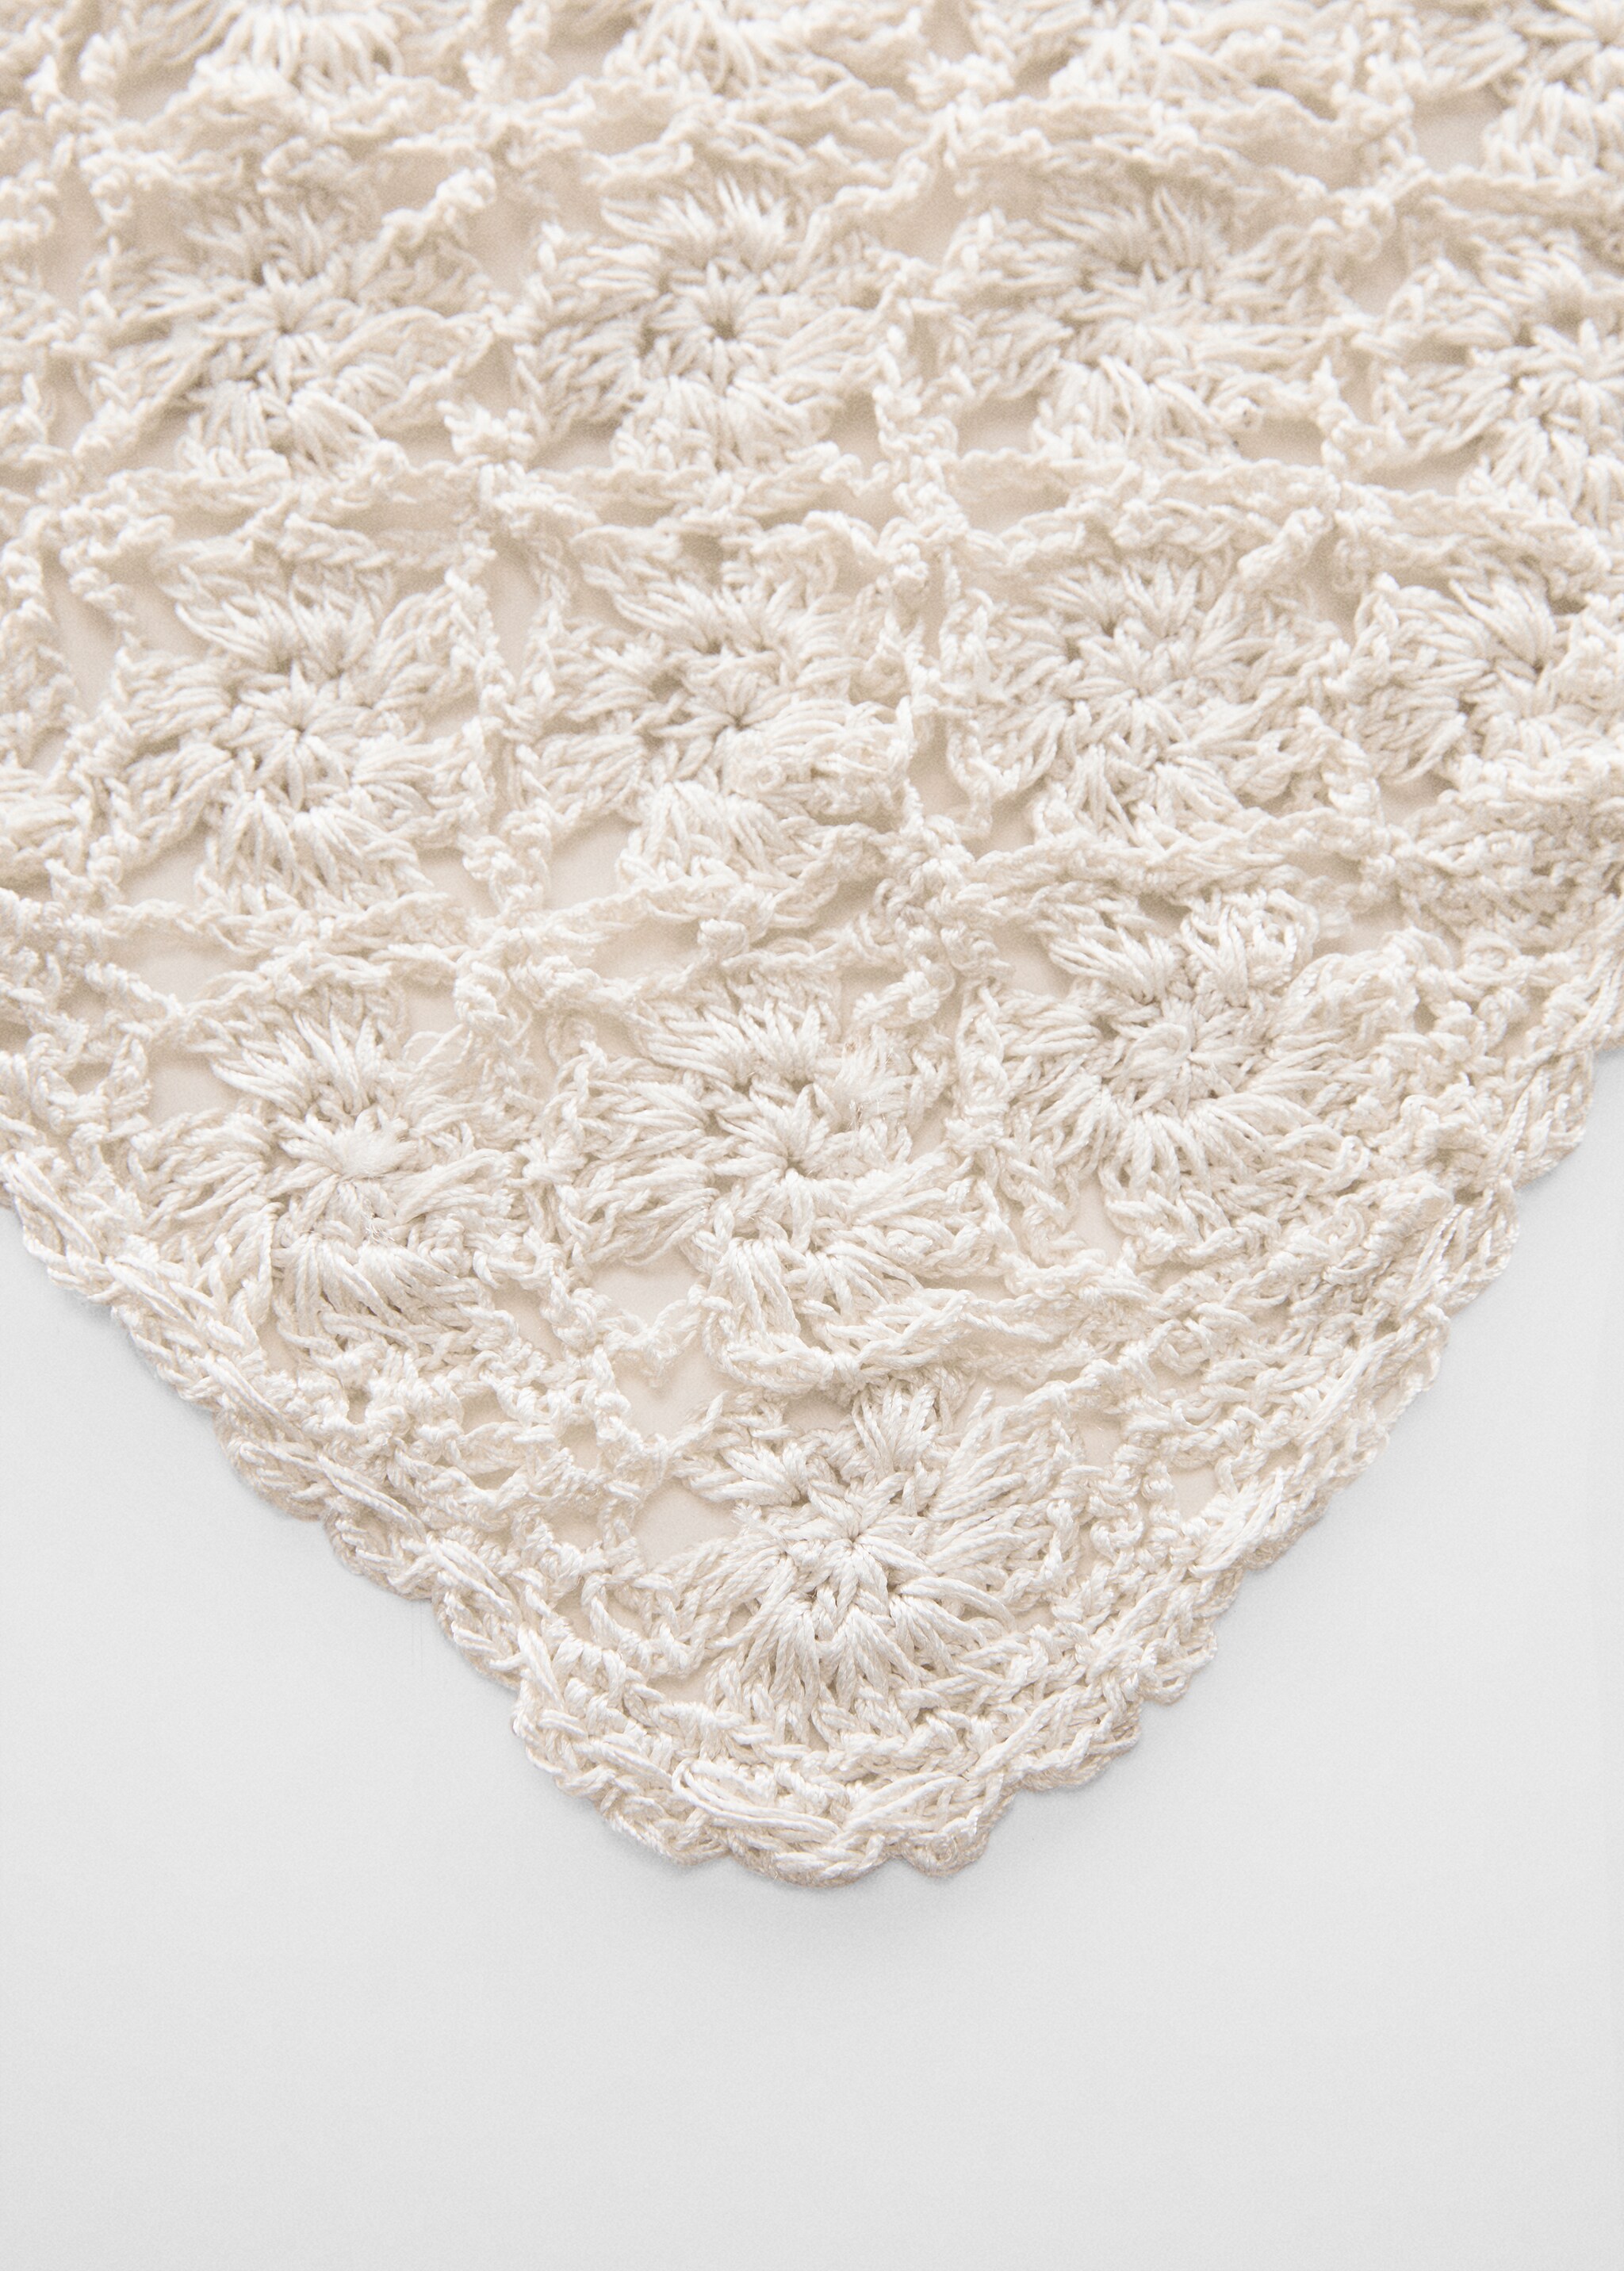 Crochet knit handkerchief - Details of the article 1